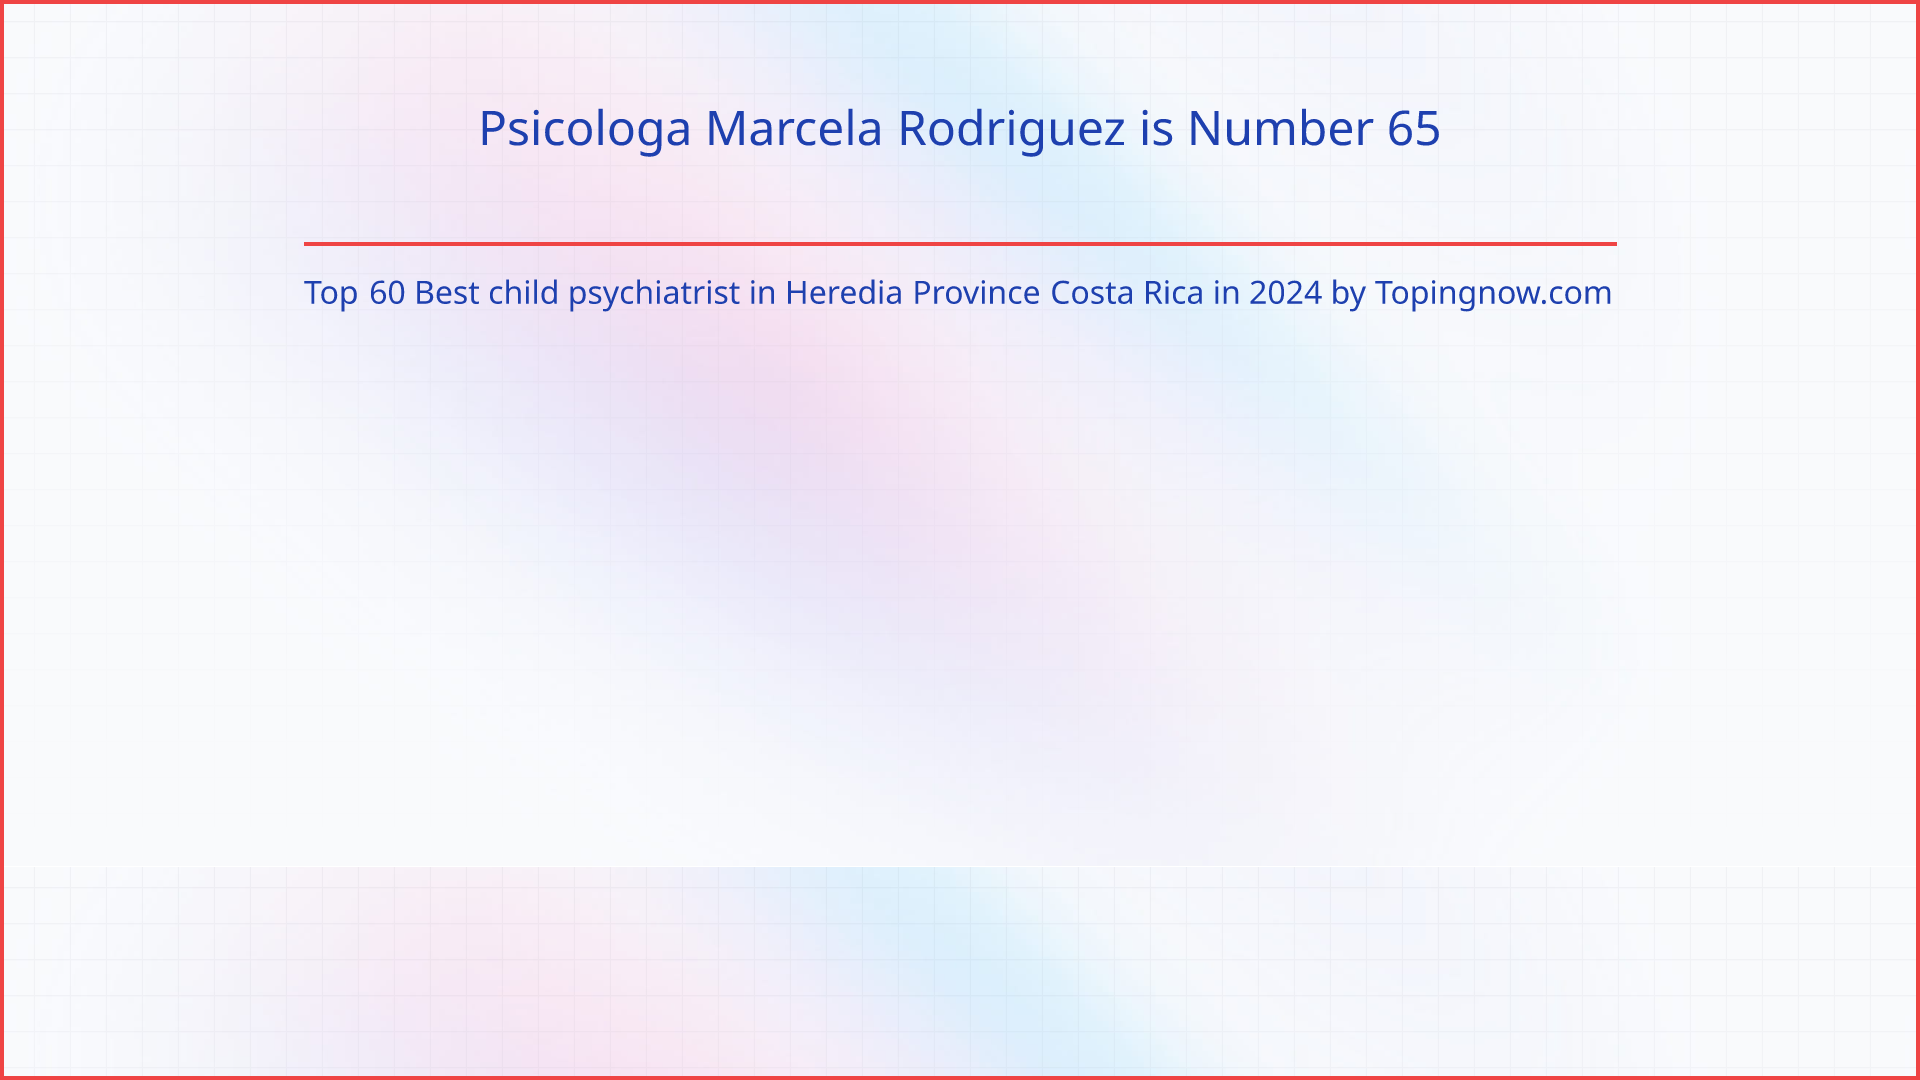 Psicologa Marcela Rodriguez: Top 60 Best child psychiatrist in Heredia Province Costa Rica in 2024